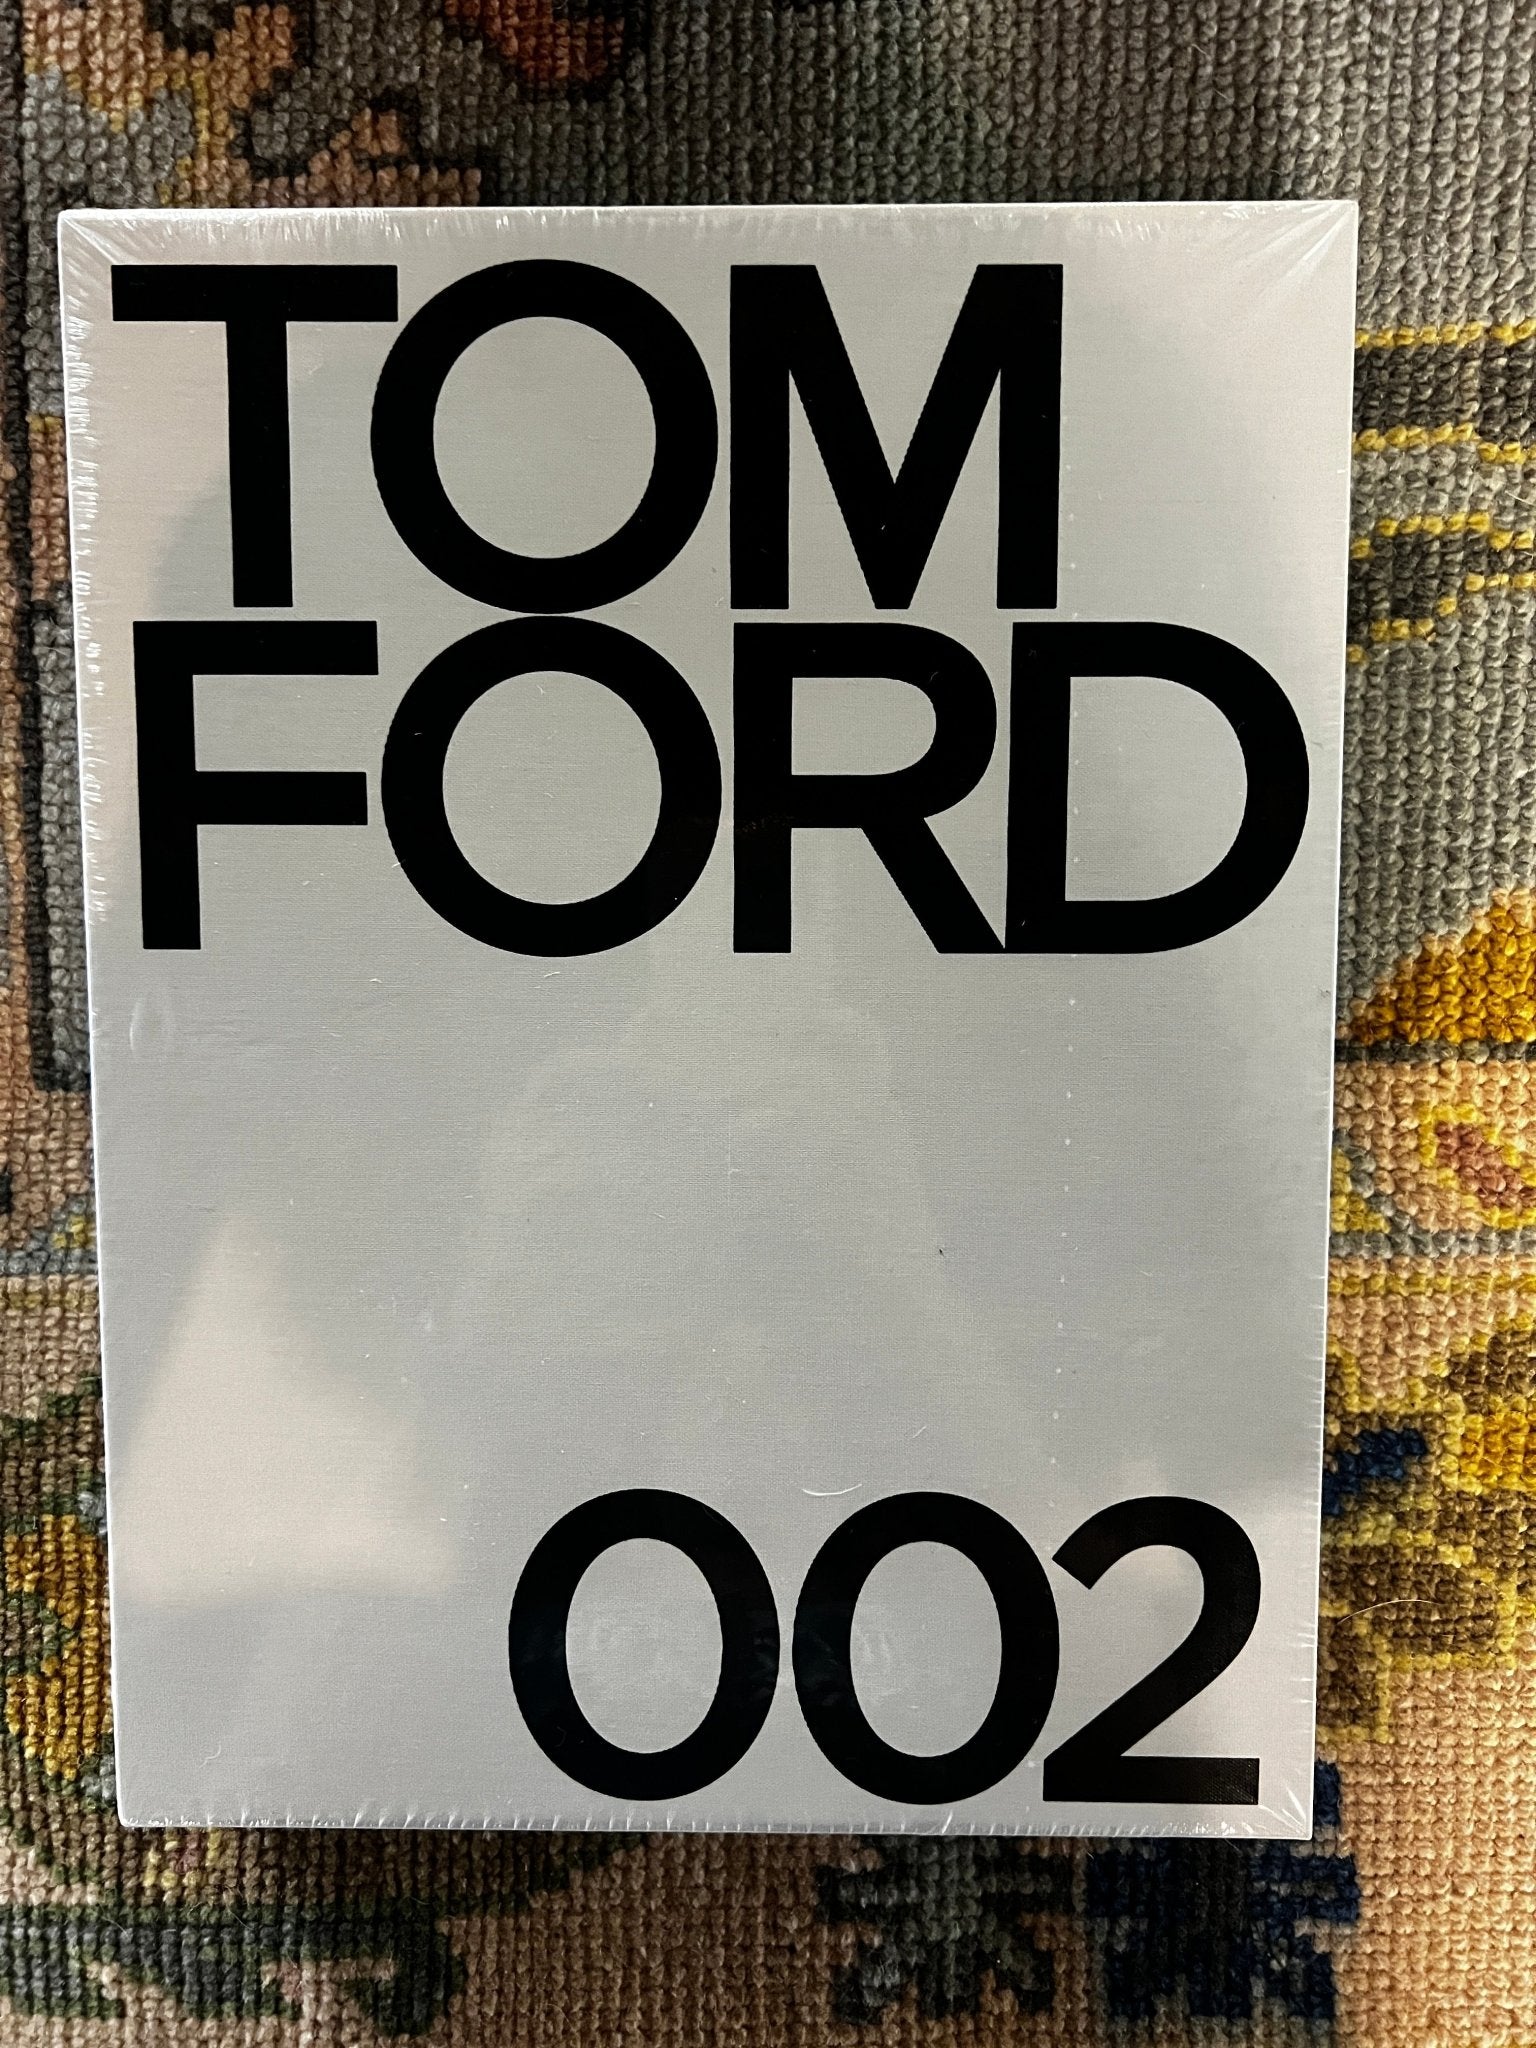 Tom Ford 002 Iconic Fashion Designer Coffee Table Book – Banana